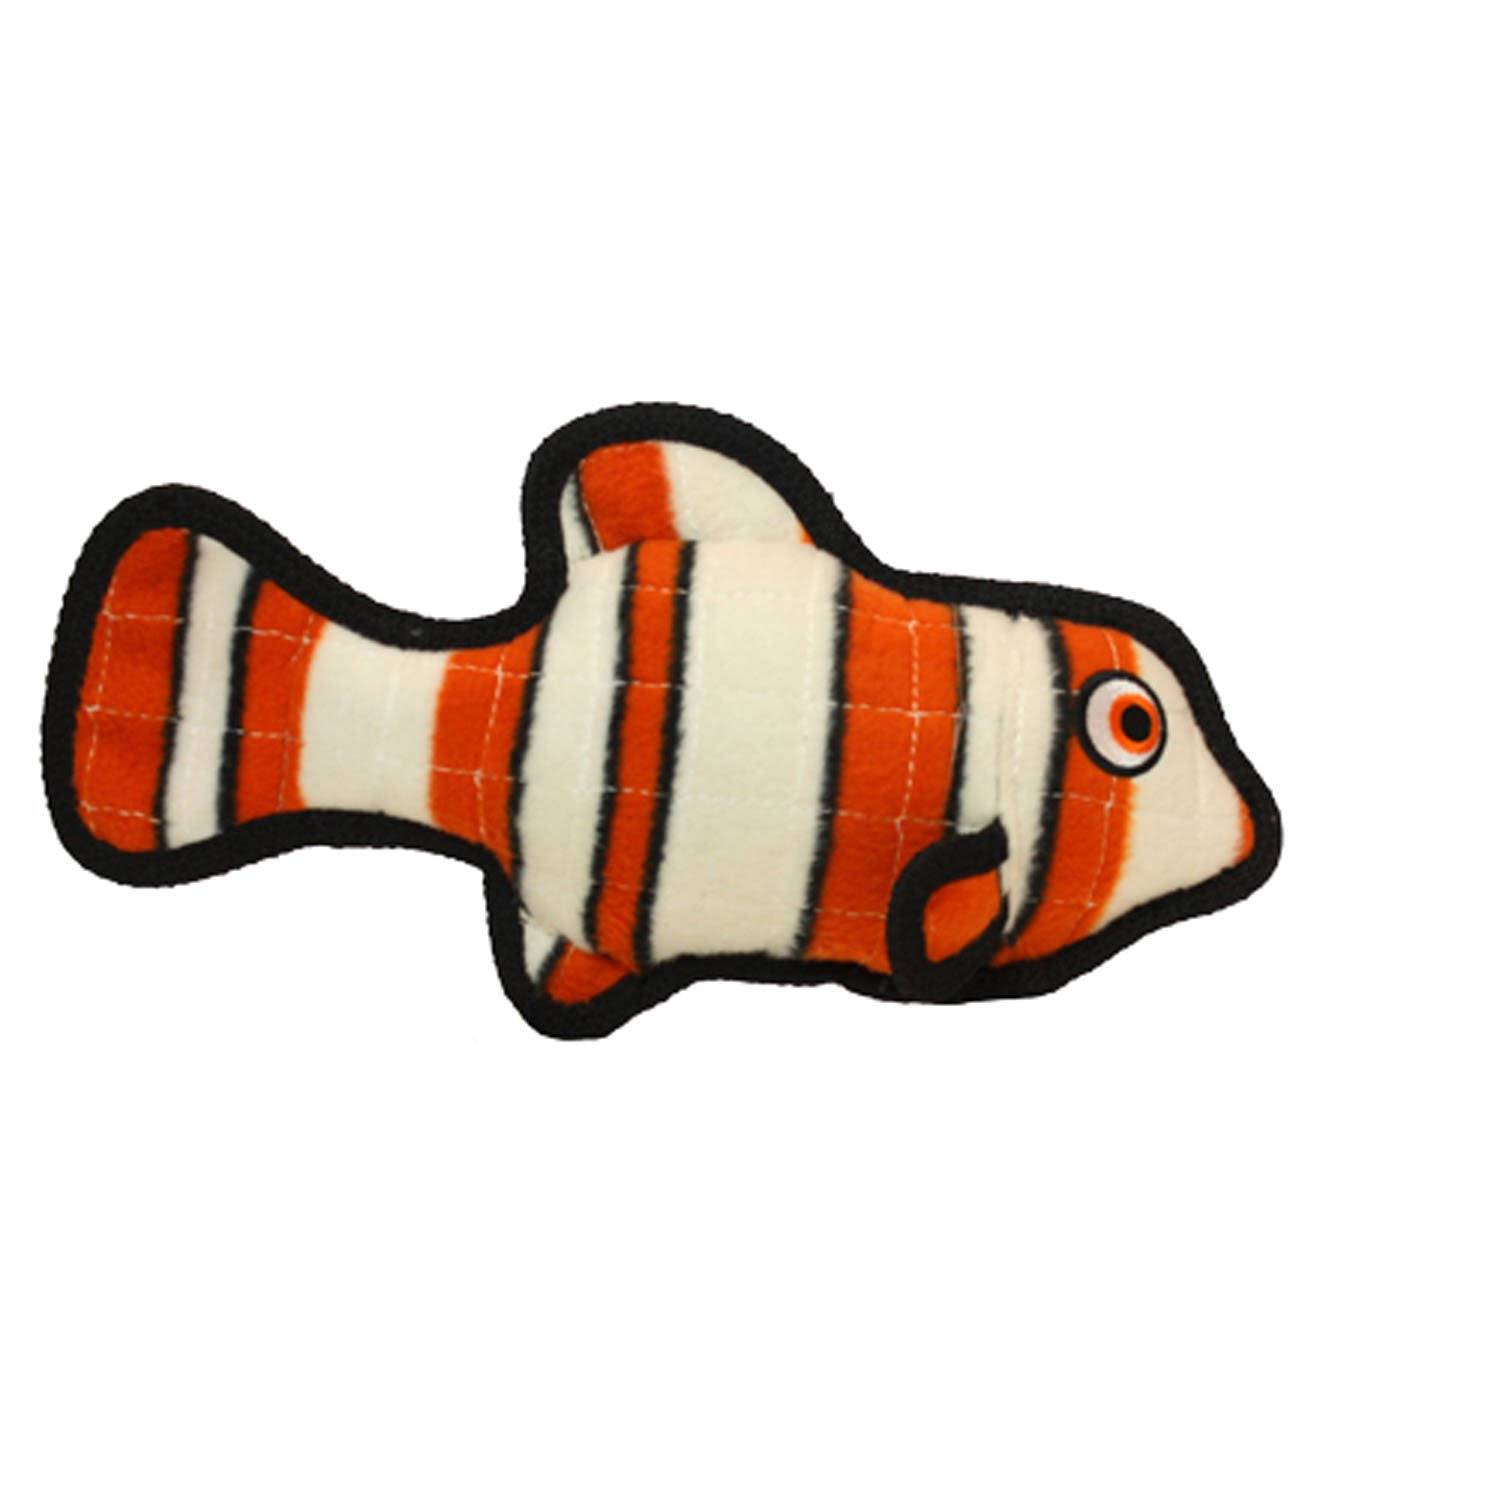 Tuffy Sea Creatures Clown Fish Dog Toy - Orange